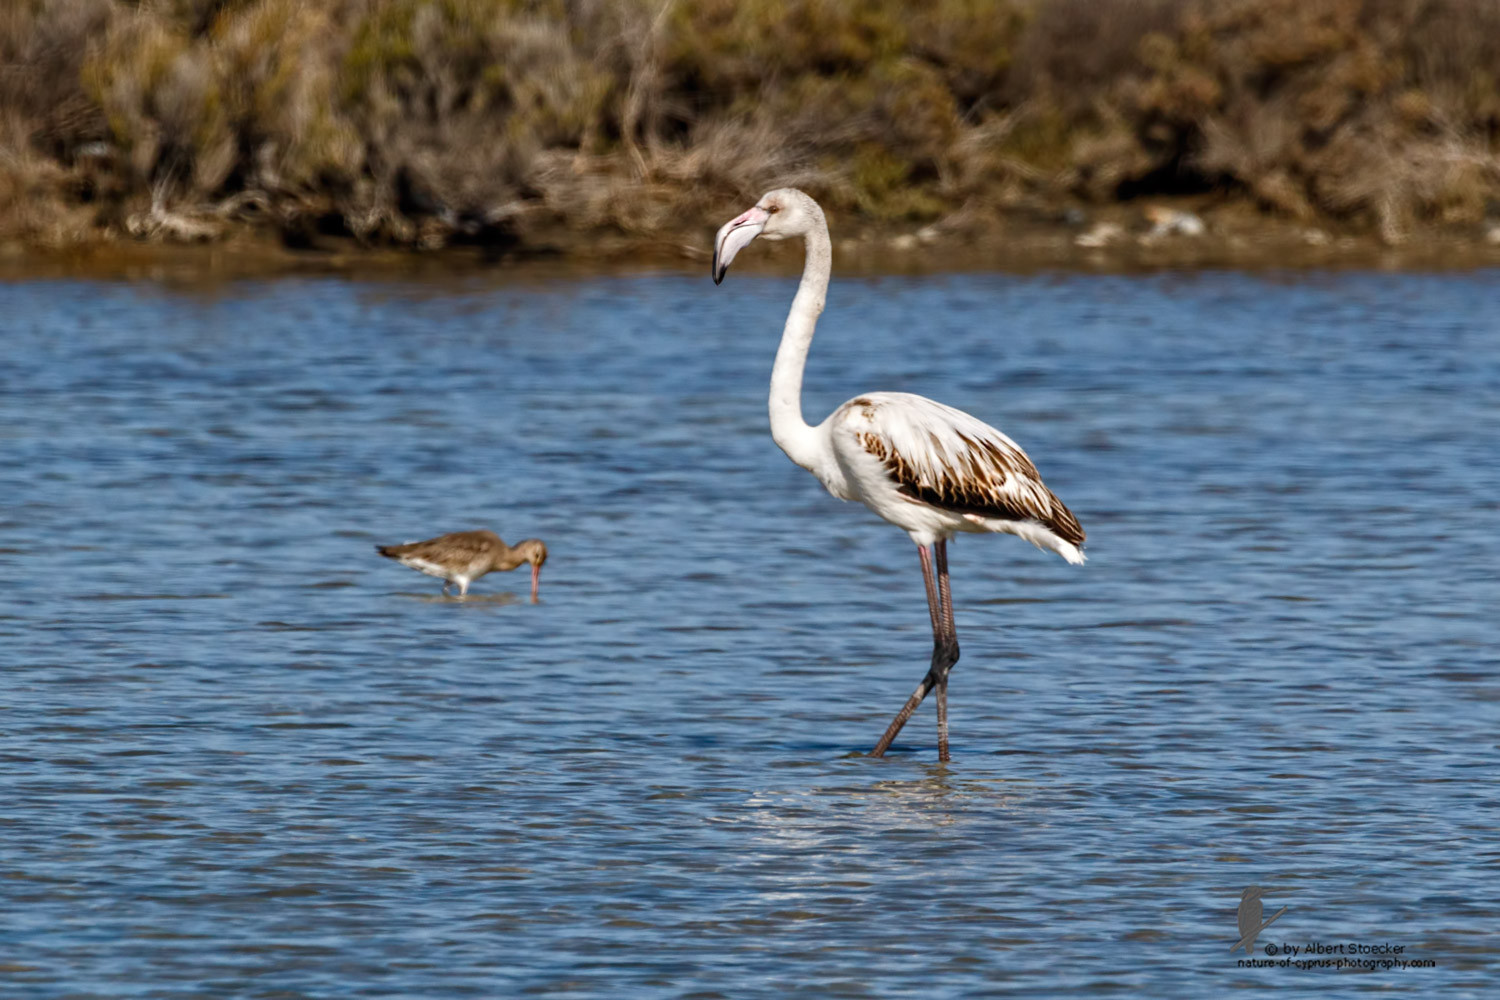 Phoenicopterus ruber - Greater Flamingo (juvenile) - Rosaflamingo, Cyprus, Zakai Marsh, March 2016